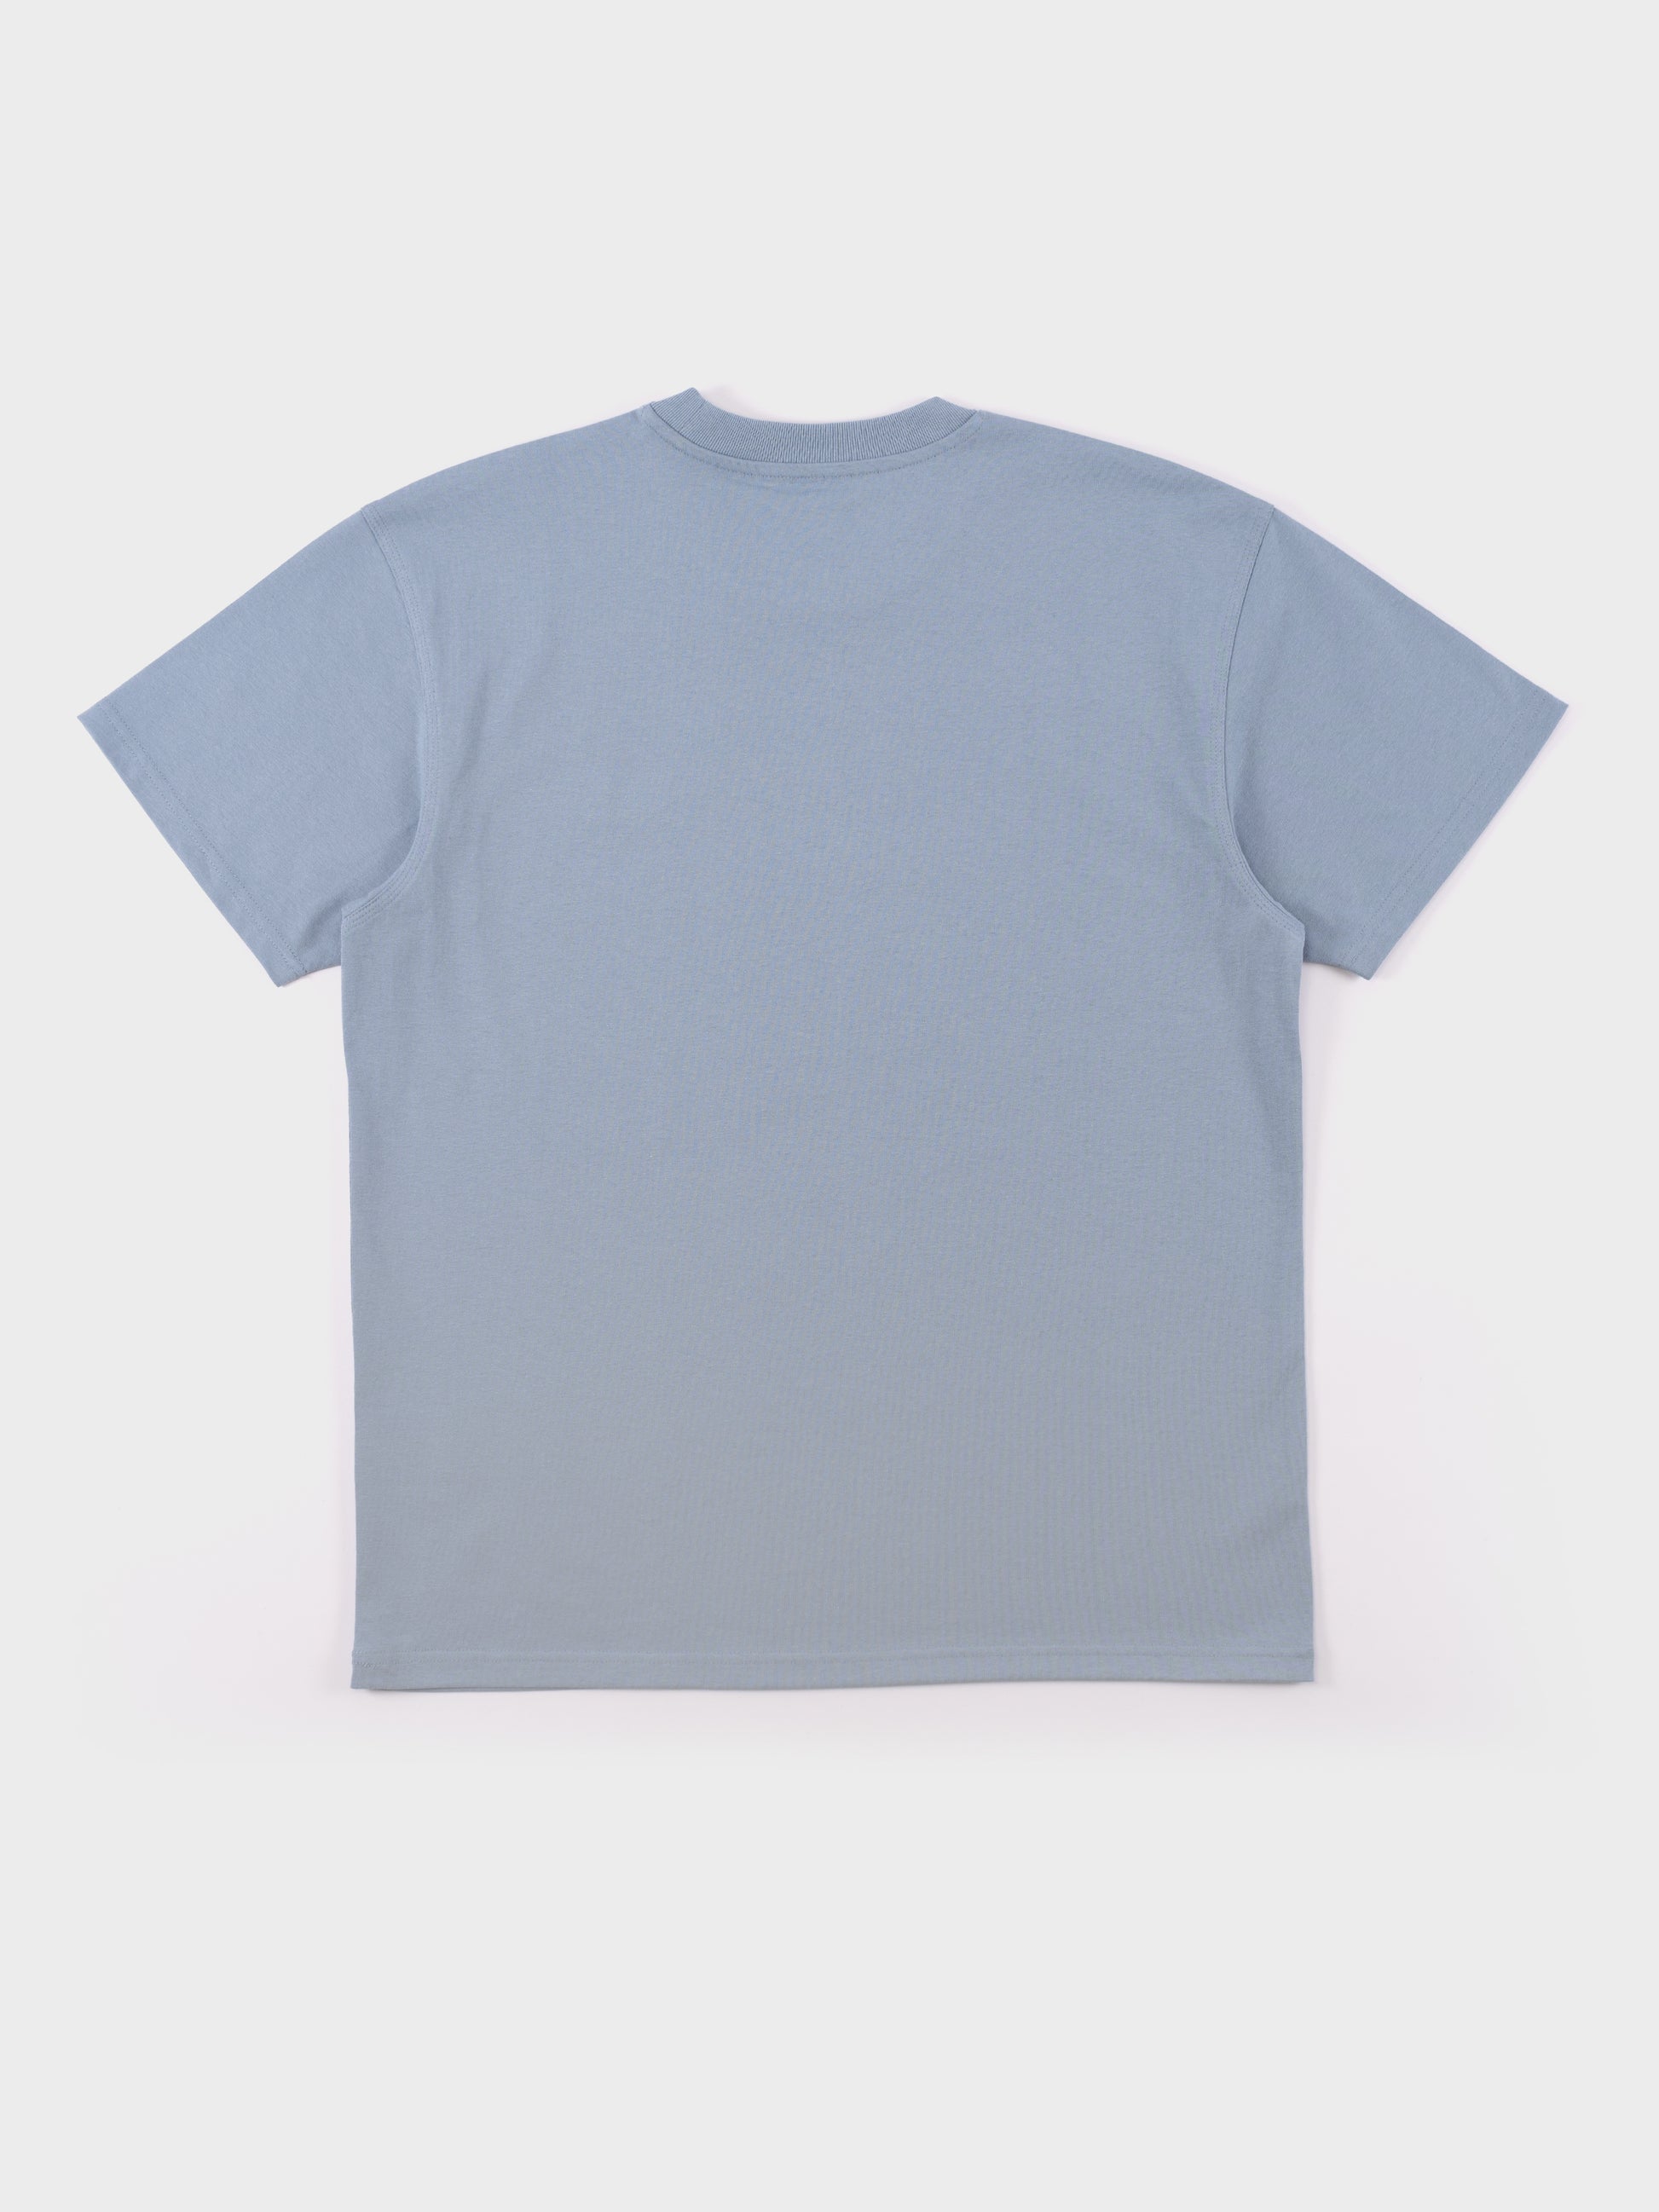 Carhartt SS American Script T Shirt - Frosted Blue